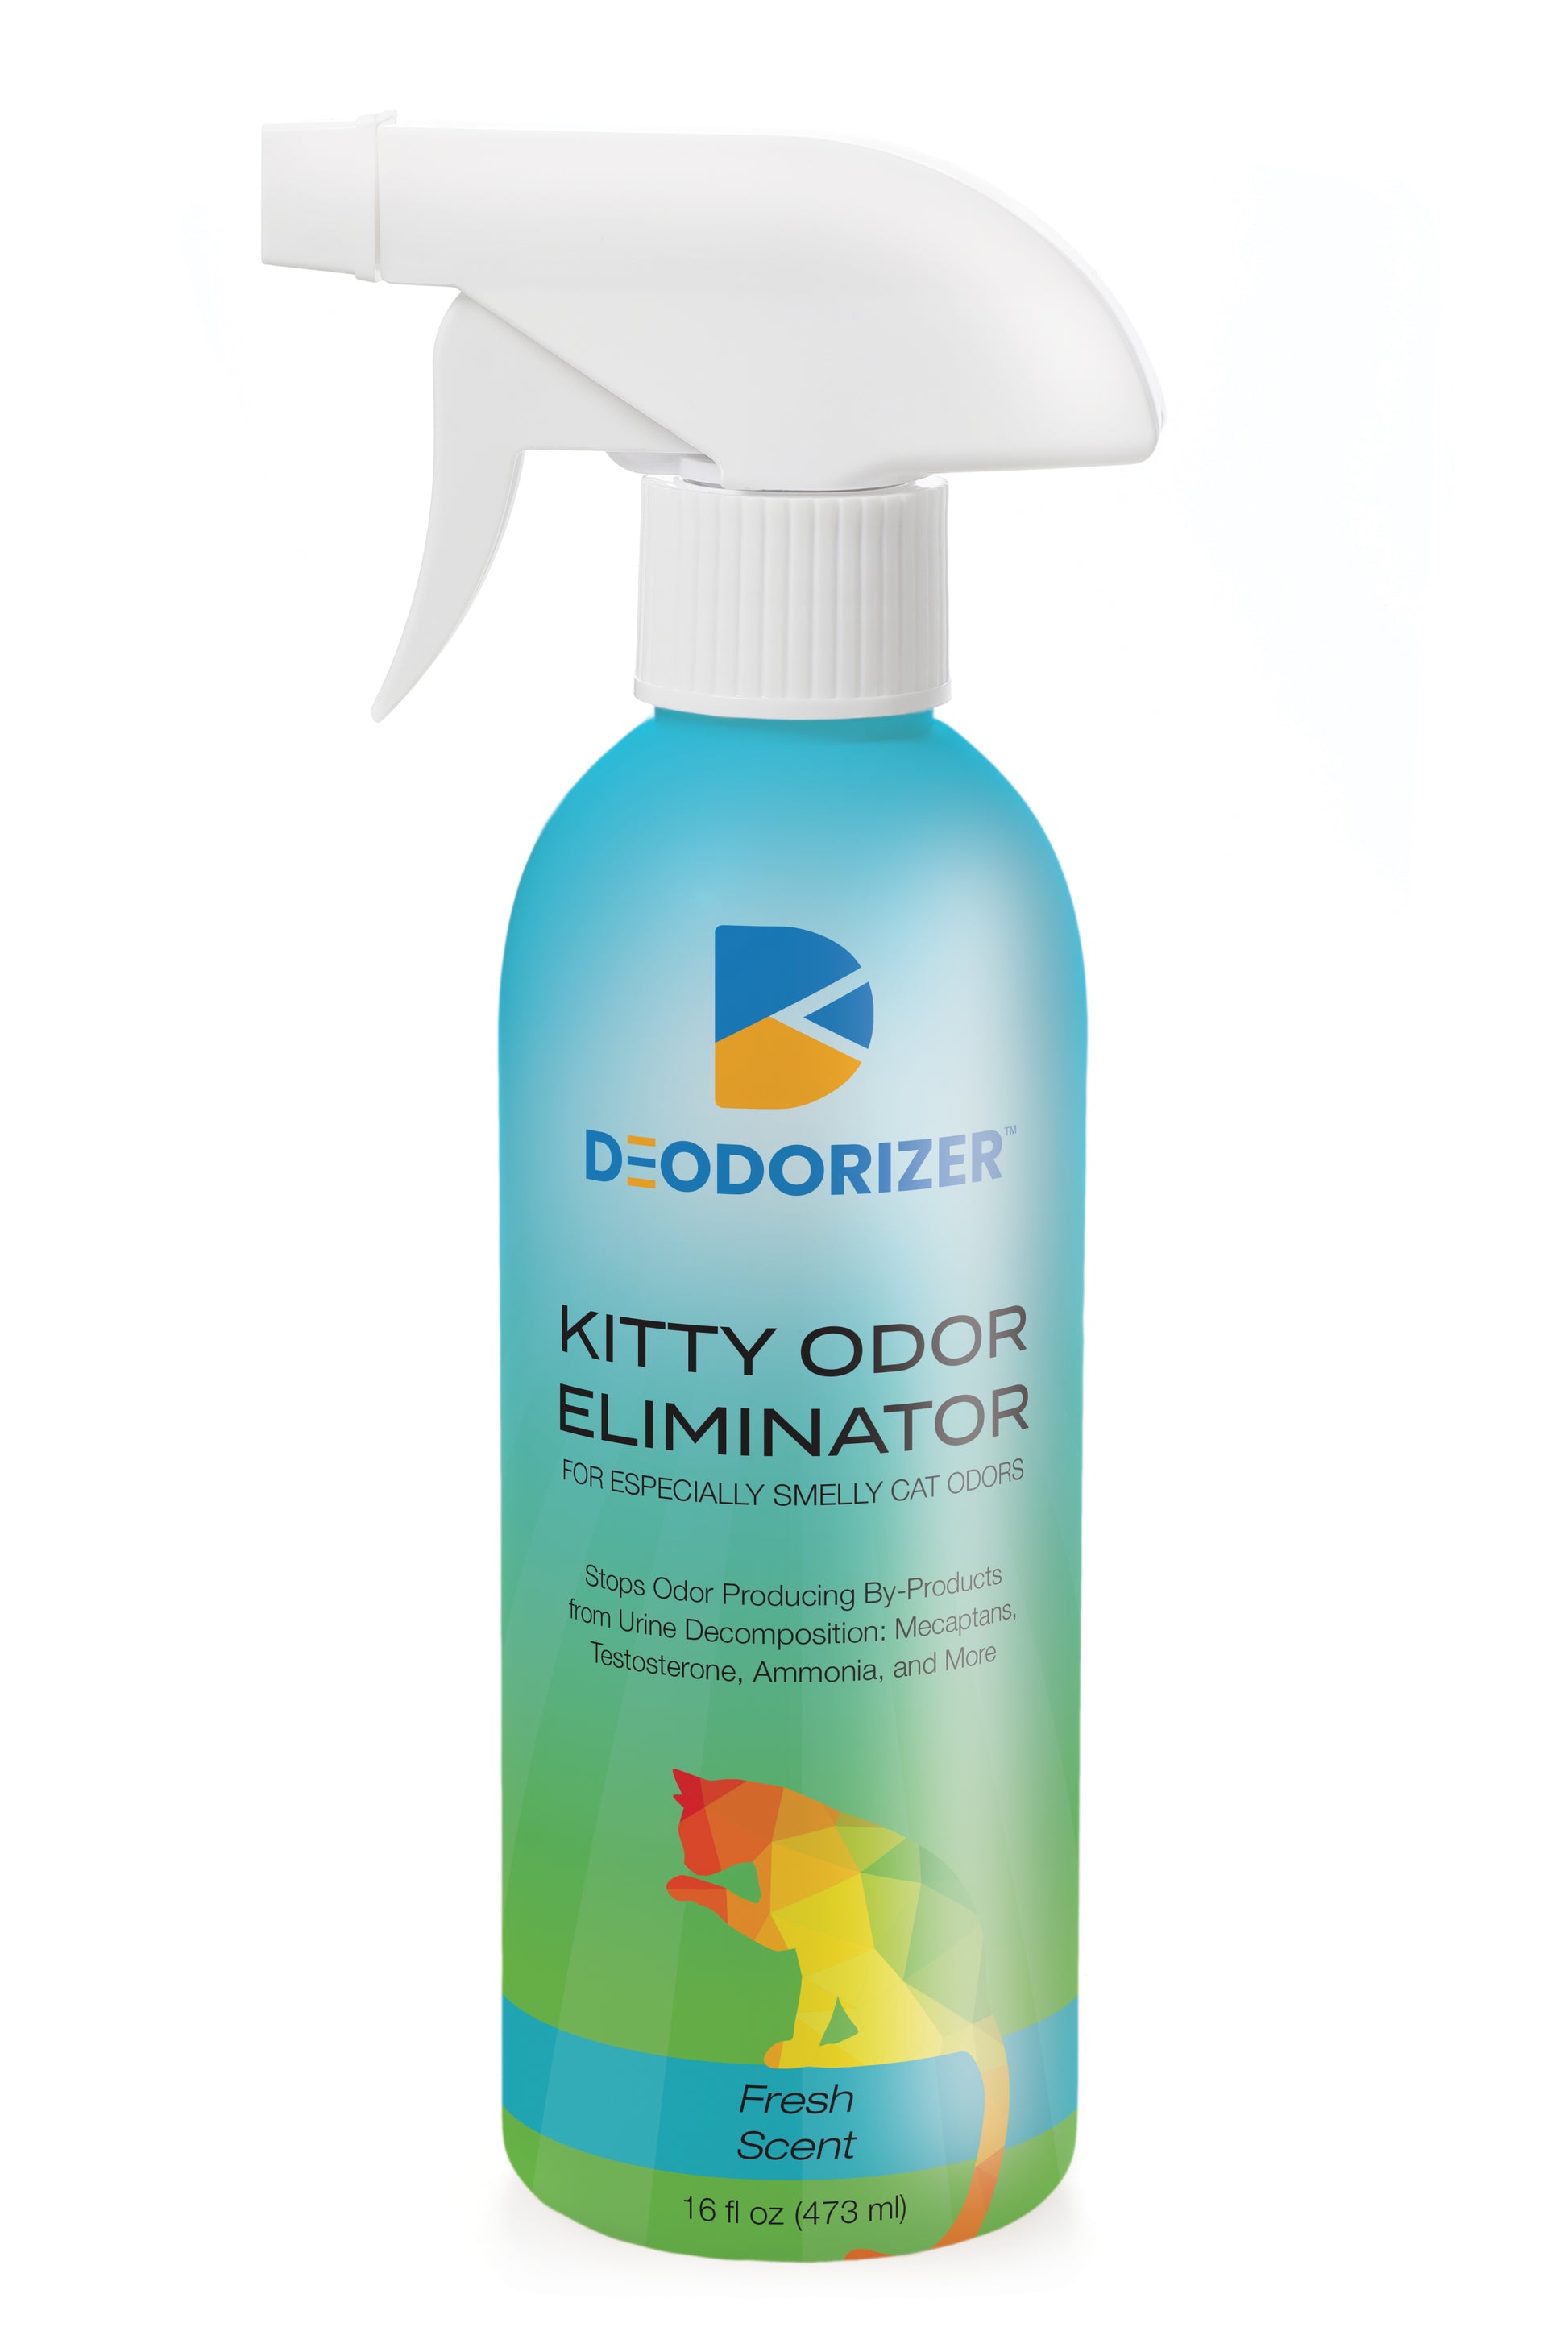 D-Odorizer Kitty Odor Eliminator - 16oz Spray Bottle